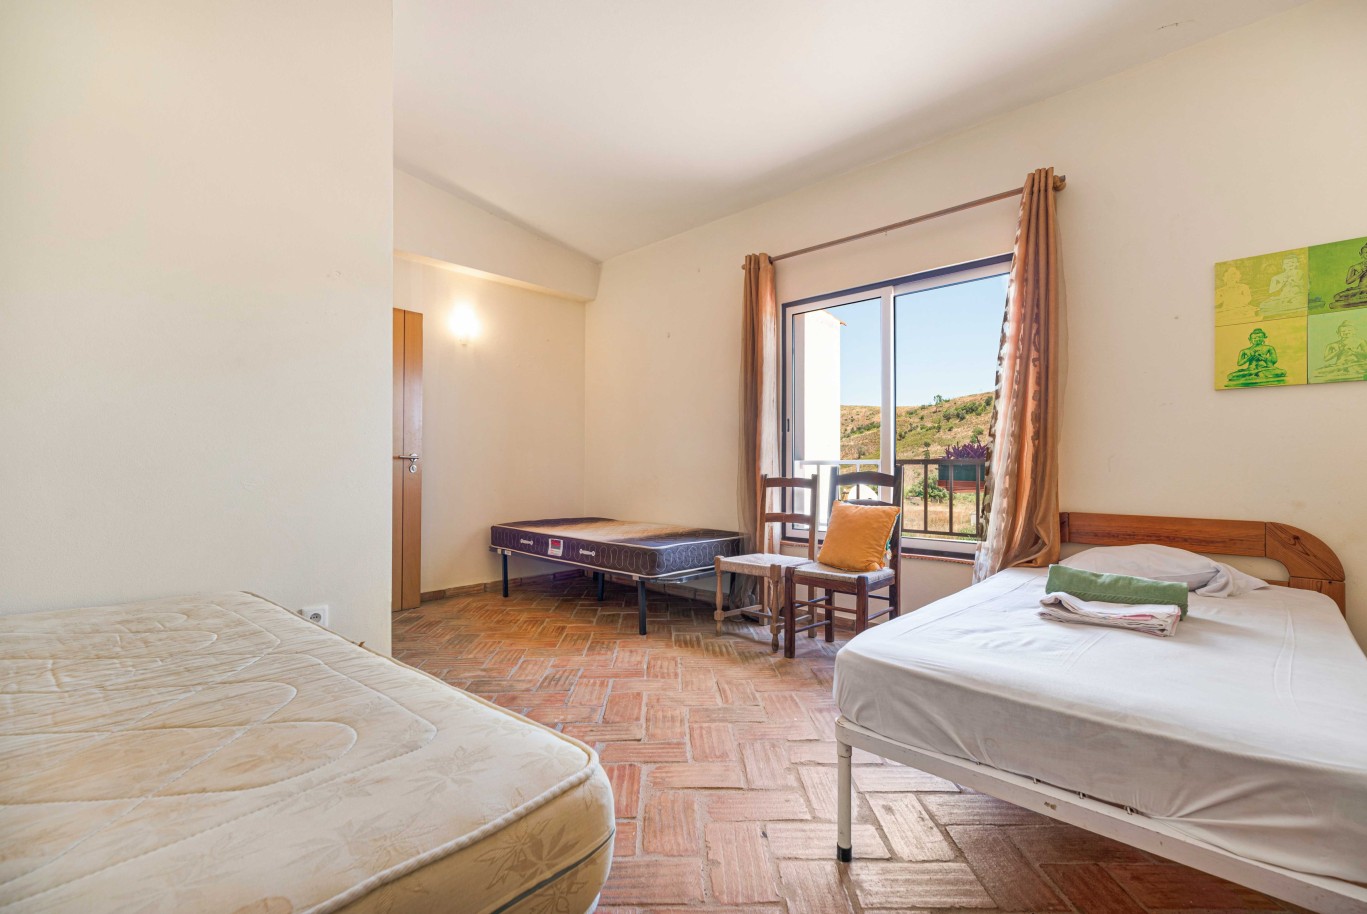 9 bedroom villa for sale in Pereira, Algarve_231600